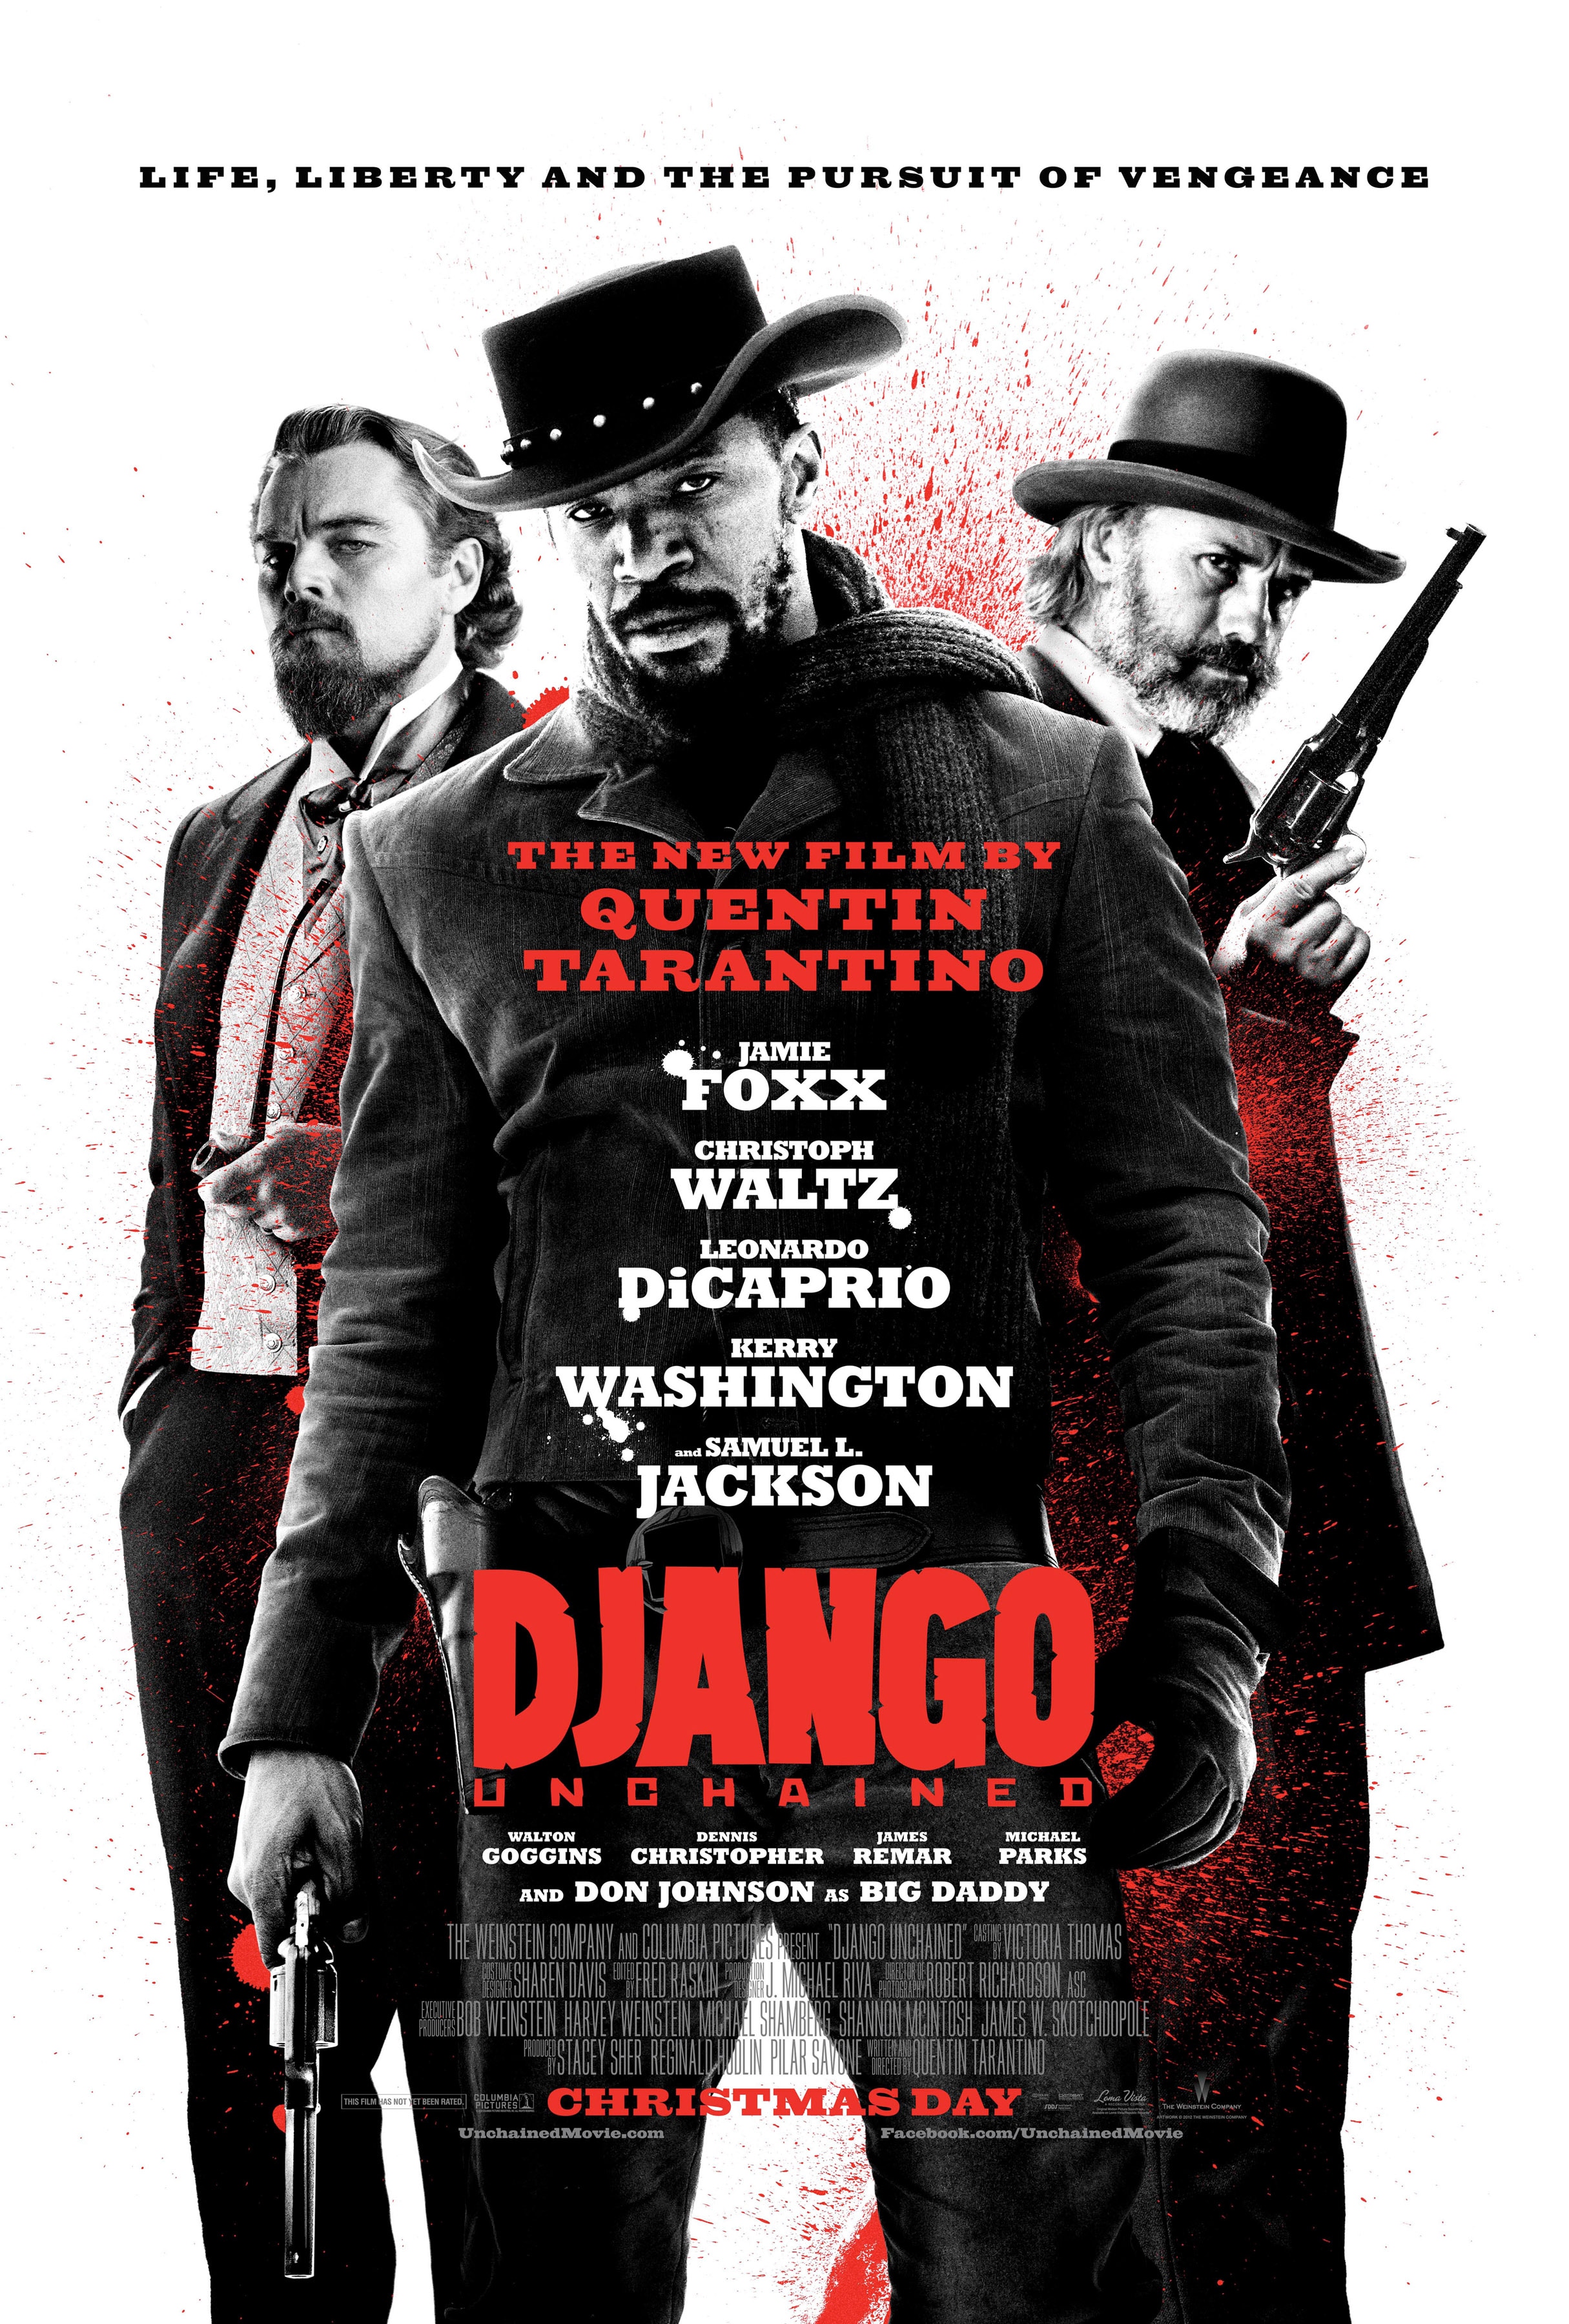 La locandina del film di Quentin Tarantino "Django Unchained", 2012